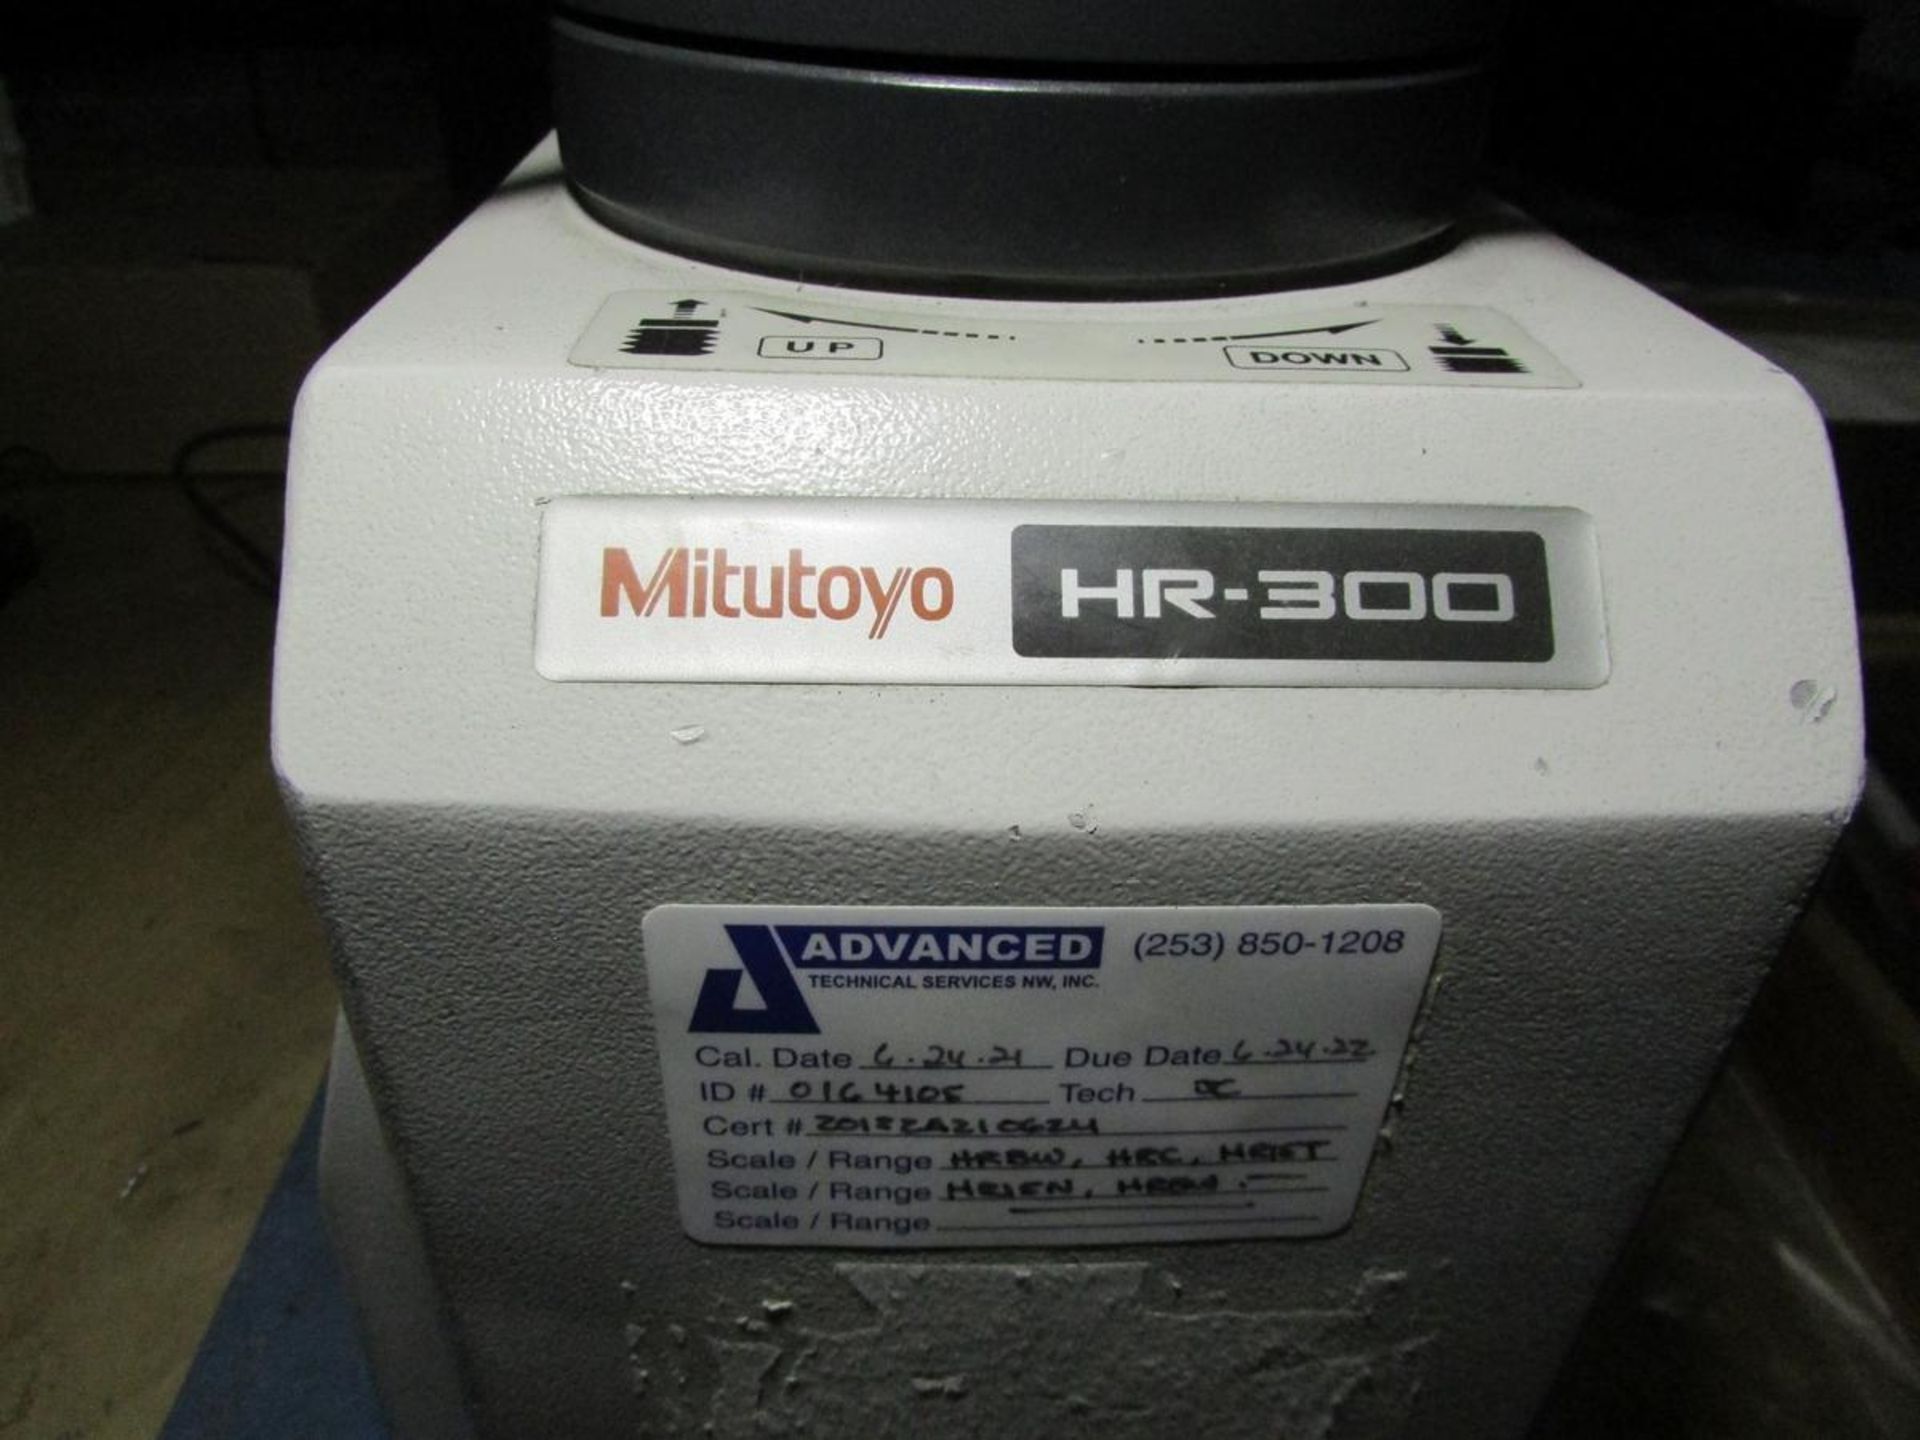 Mitutoyo HR-300 Benchtop Digital Rockwell Hardness Tester - Image 5 of 10